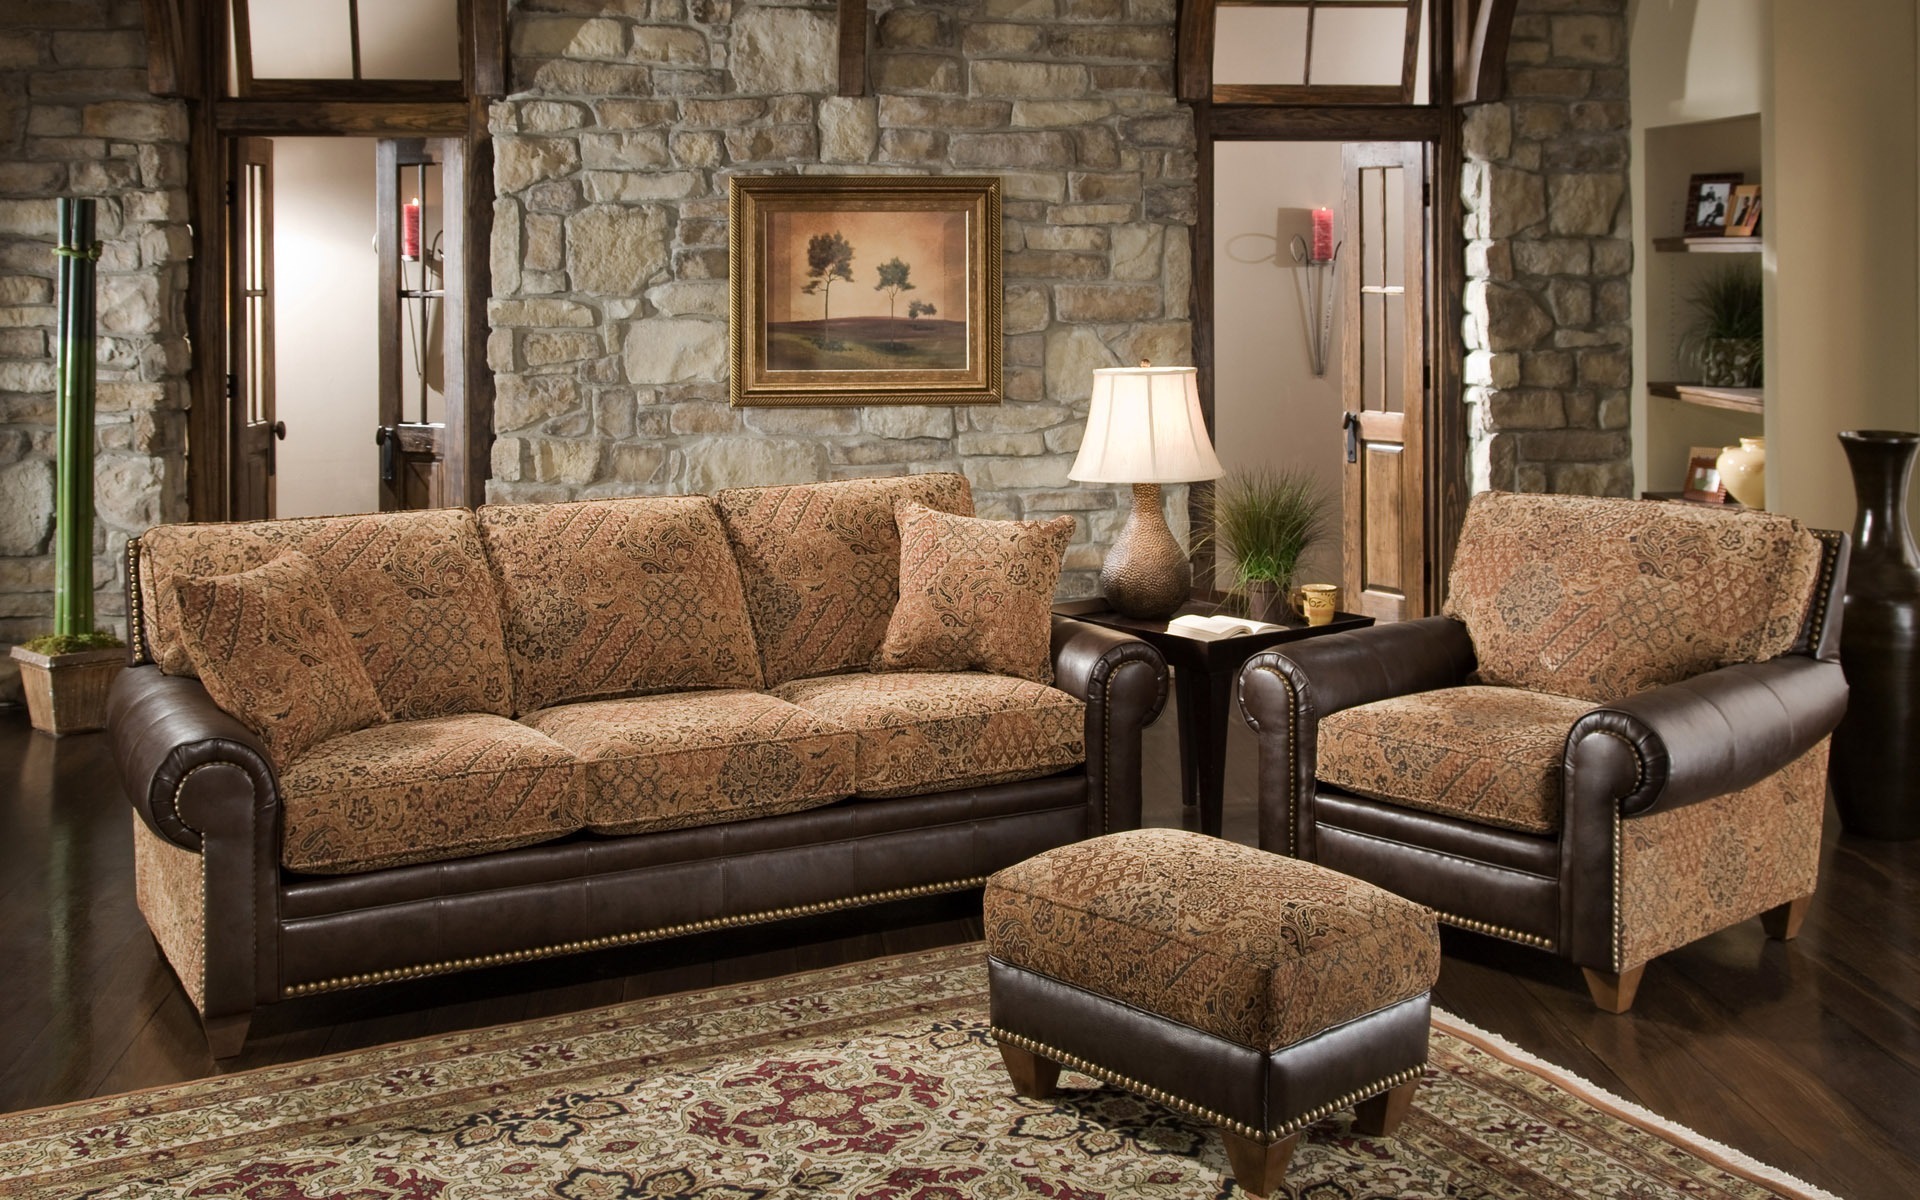 каменная гостиная интерьер stone living room interior бесплатно